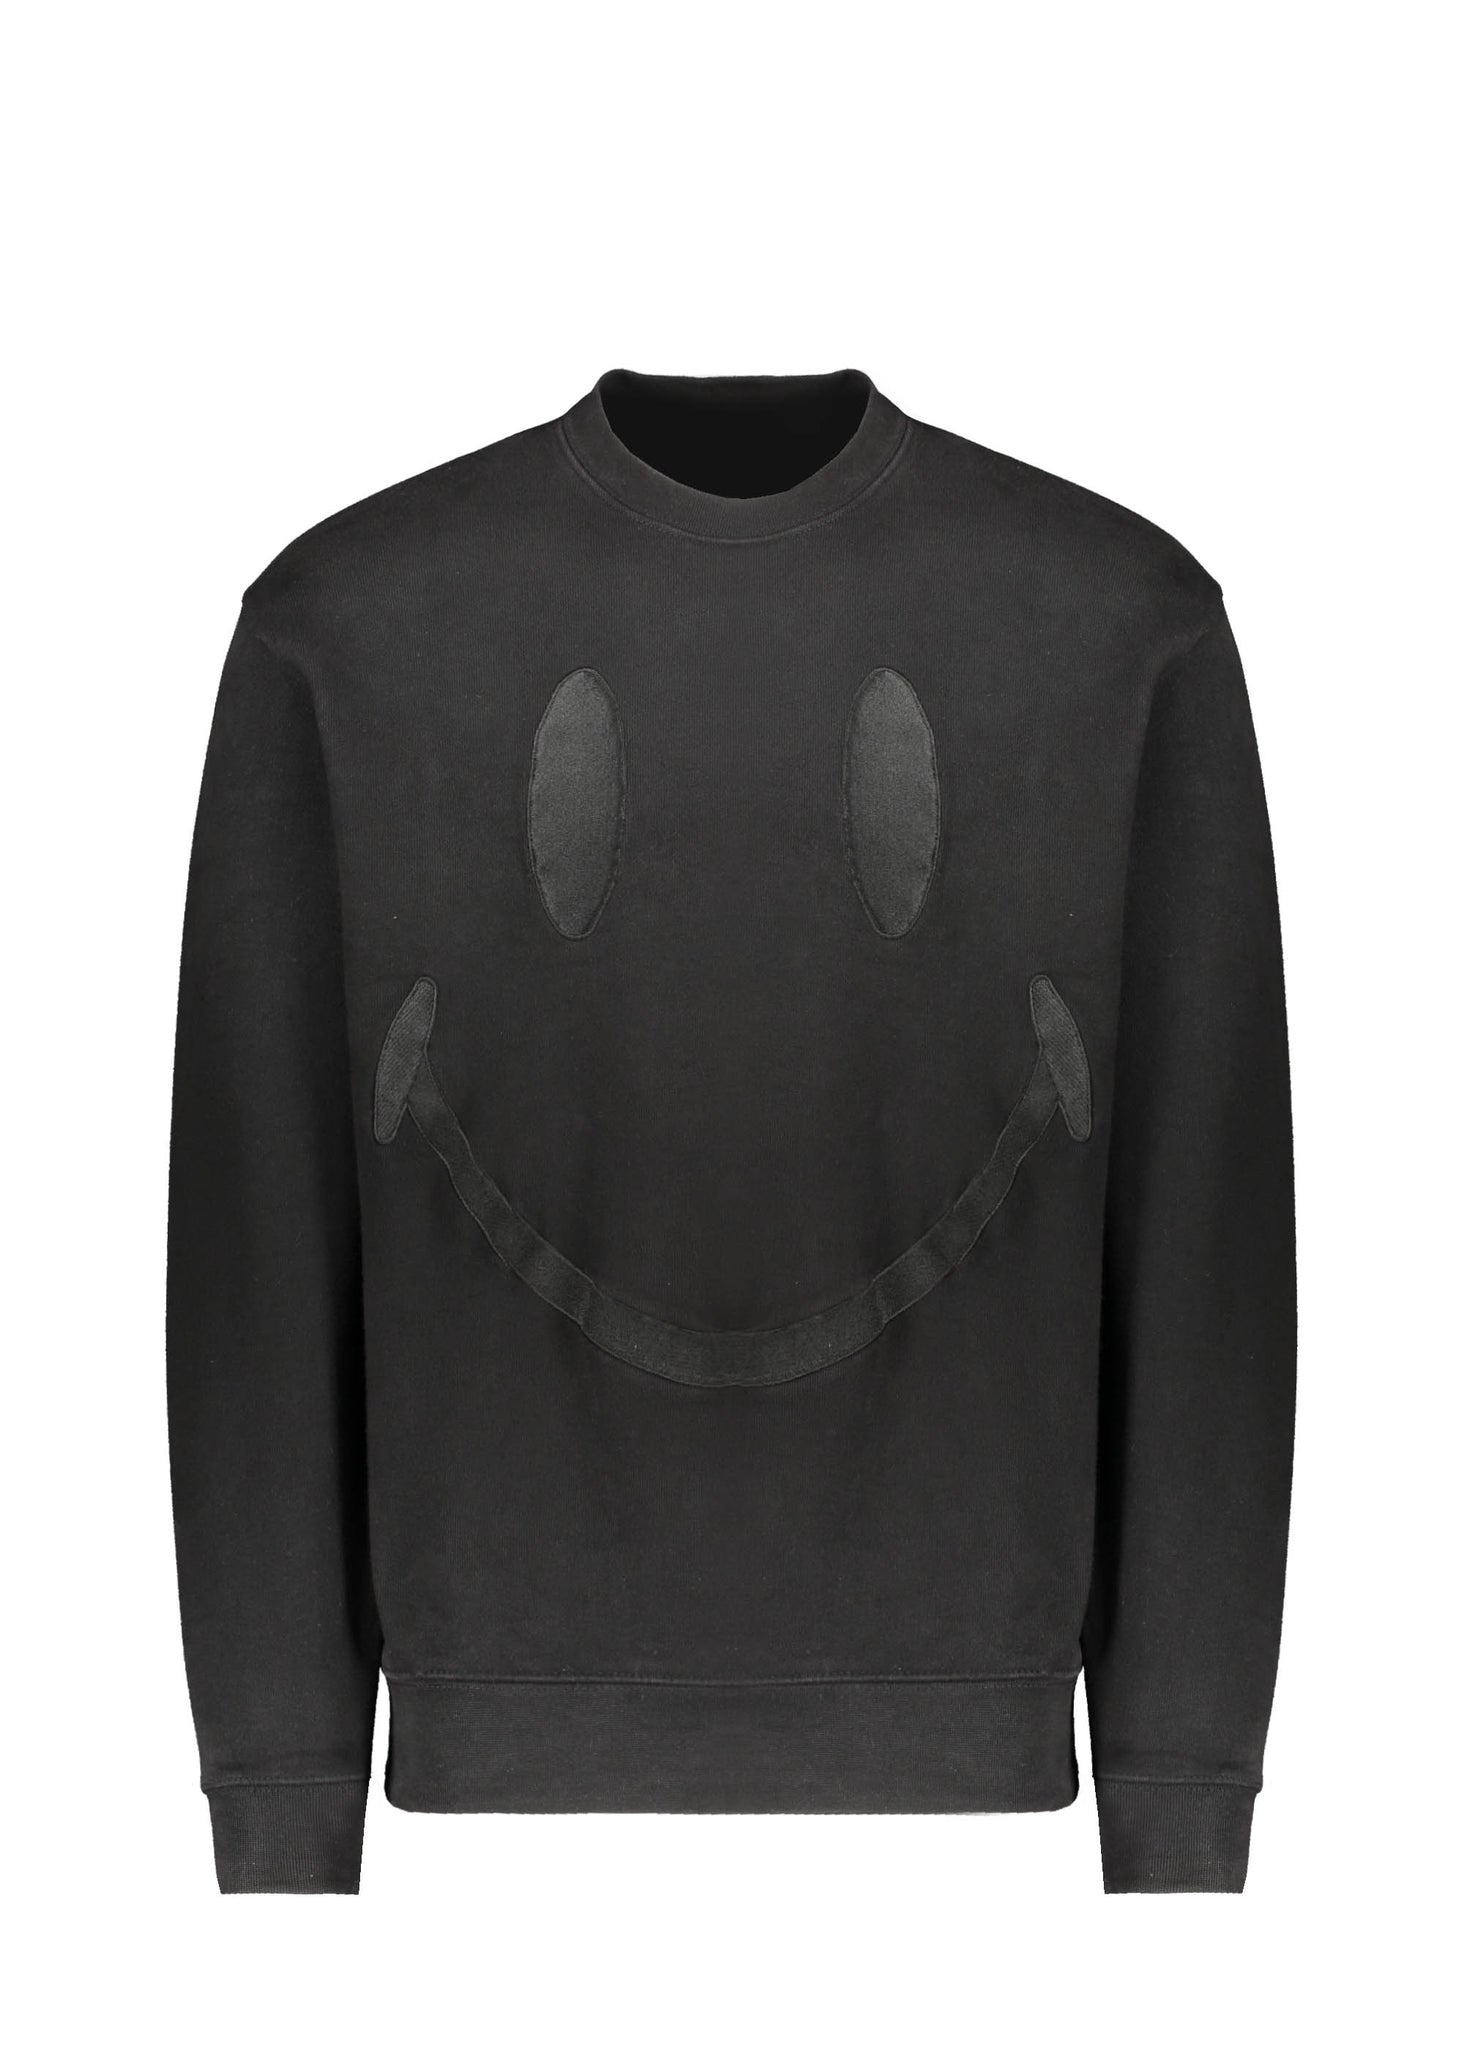 Market Smiley Oversized Crewneck Sweater - Black